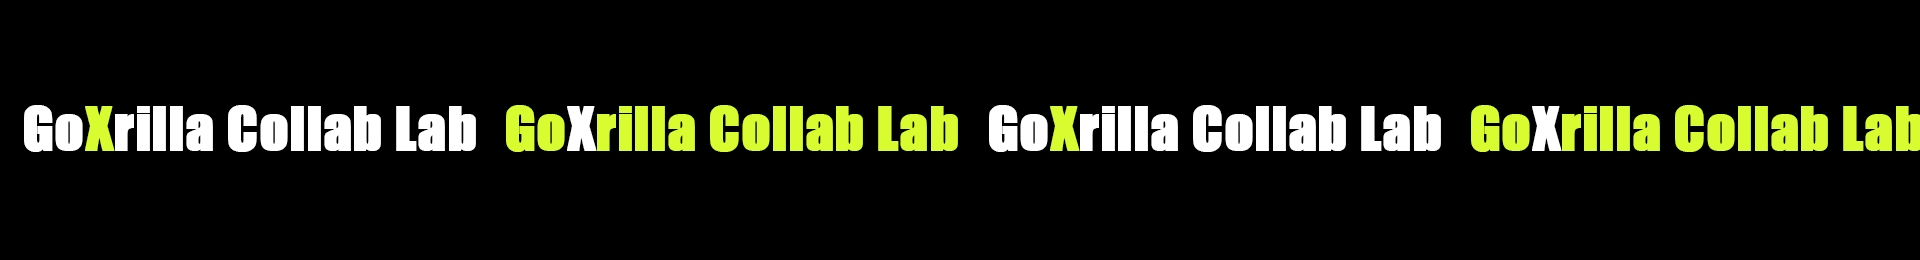 GoXrilla Collab Lab banner